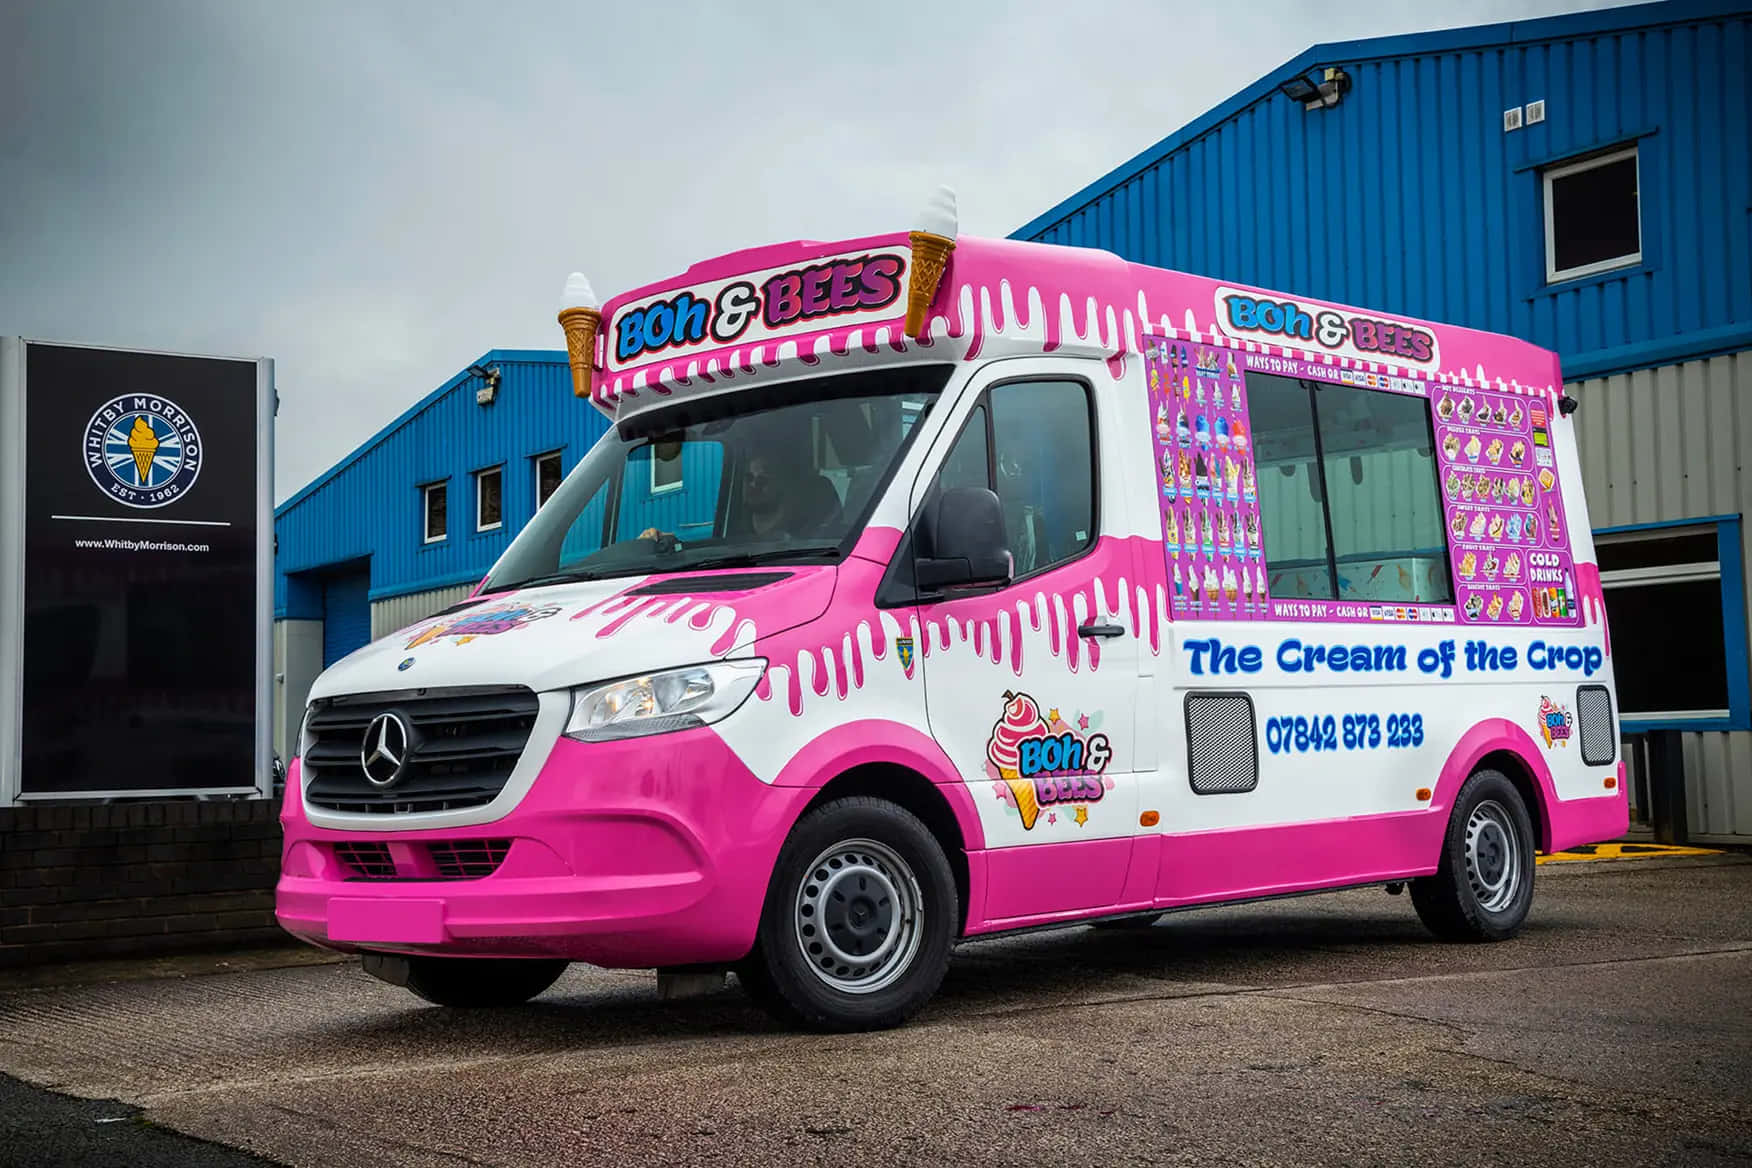 The sweet summer treat: Ice Cream Truck!